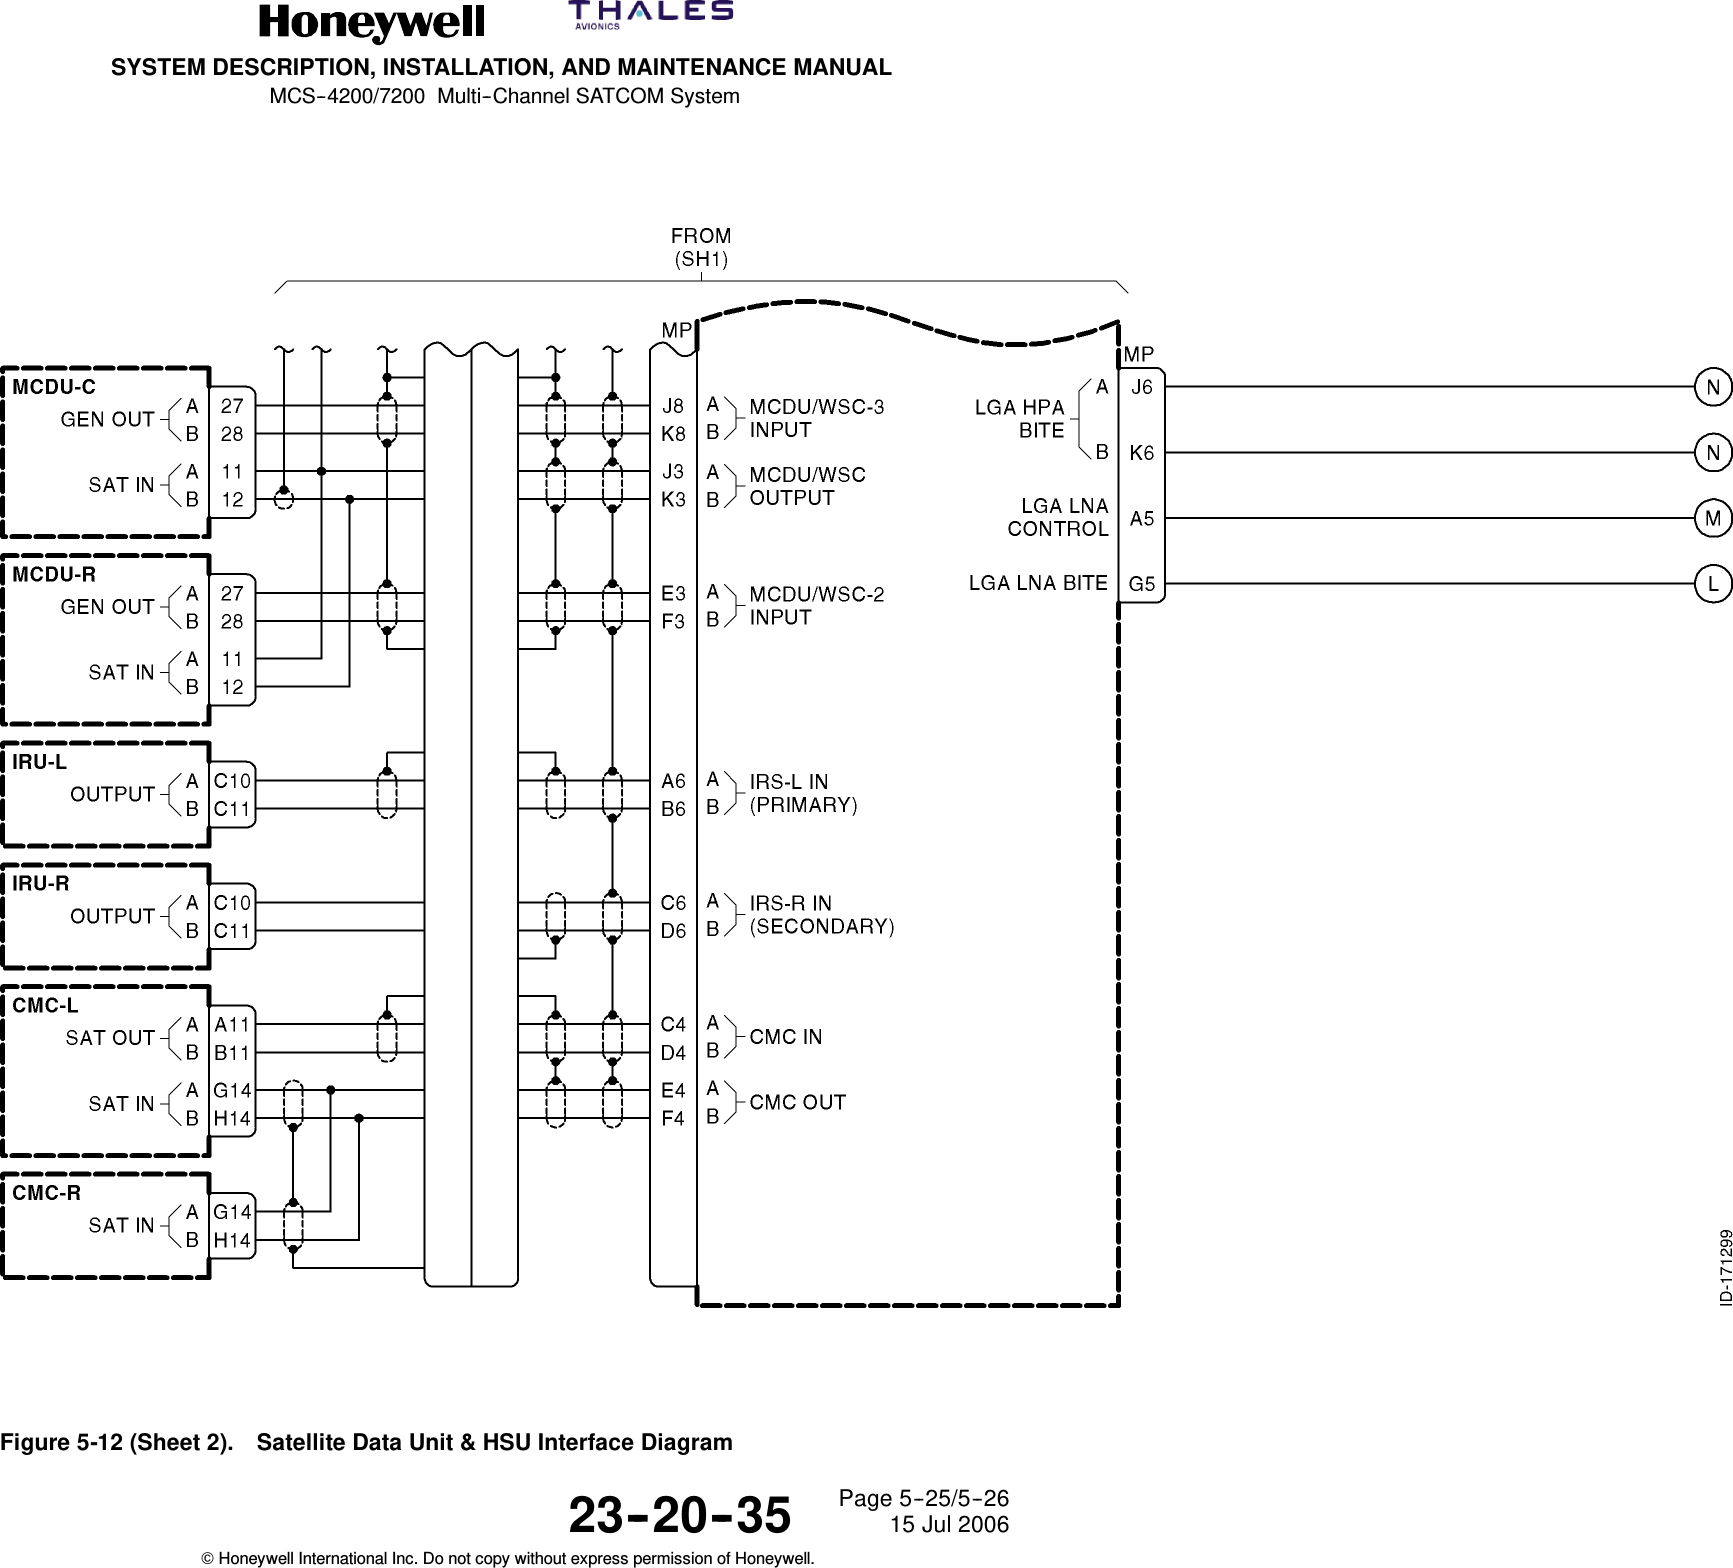 SYSTEM DESCRIPTION, INSTALLATION, AND MAINTENANCE MANUALMCS--4200/7200 Multi--Channel SATCOM System23--20--35 15 Jul 2006Honeywell International Inc. Do not copy without express permission of Honeywell.Page 5--25/5--26Figure 5-12 (Sheet 2). Satellite Data Unit &amp; HSU Interface Diagram